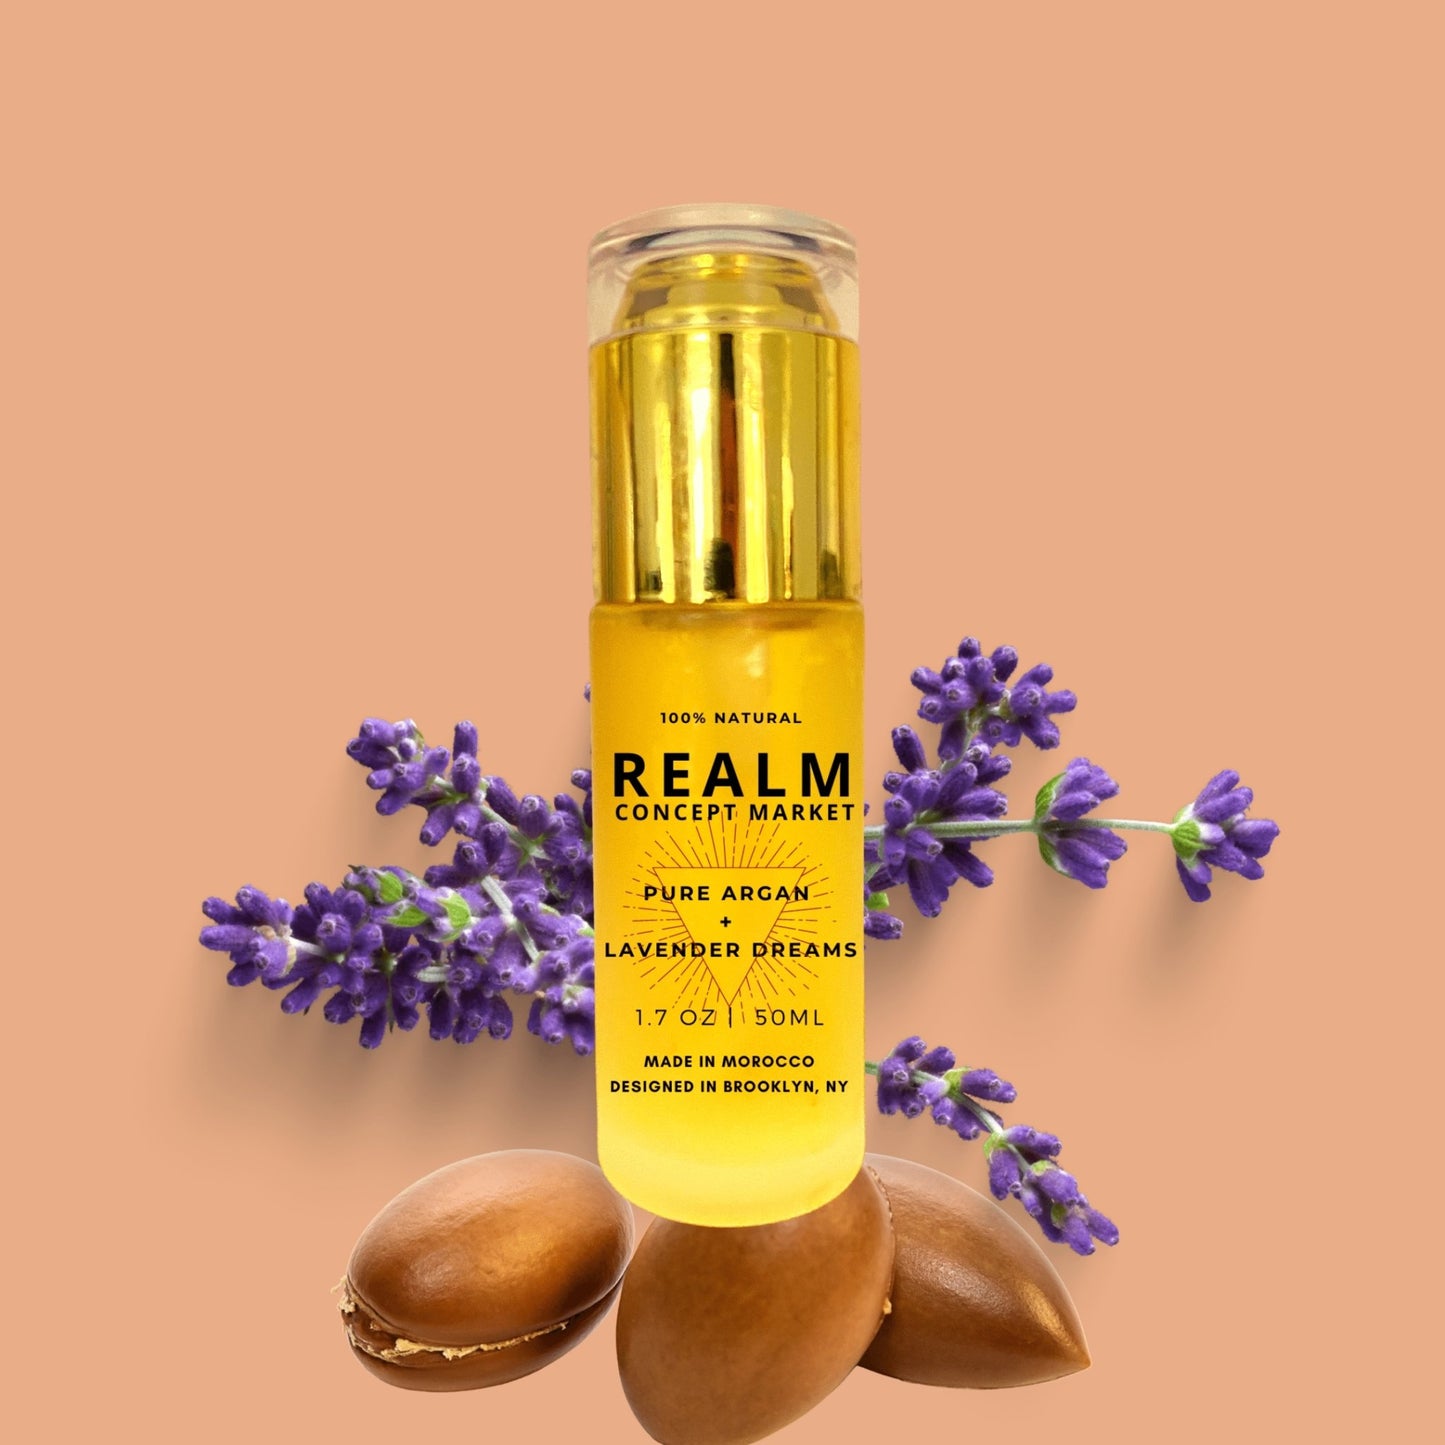 Lavender Dreams Argan Oil | Realm Concept Market - Realm Concept Market